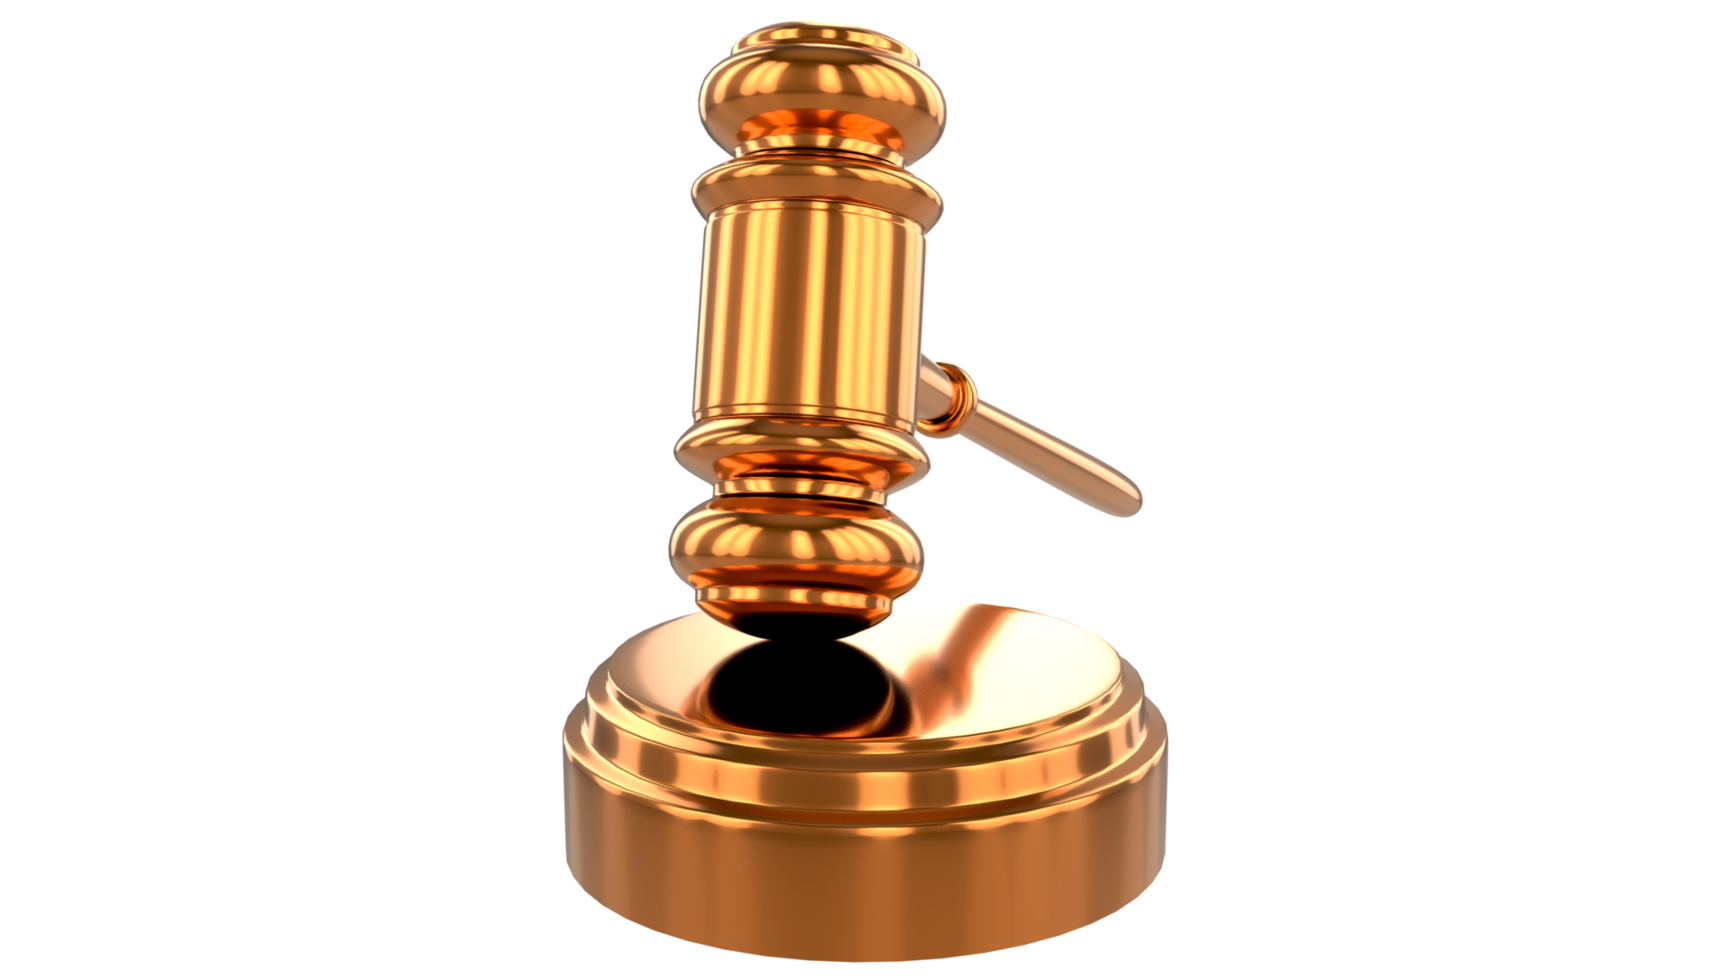 Judge hammer law gavel. Auction court hammer bid authority concept symbol PNG Transparent Background